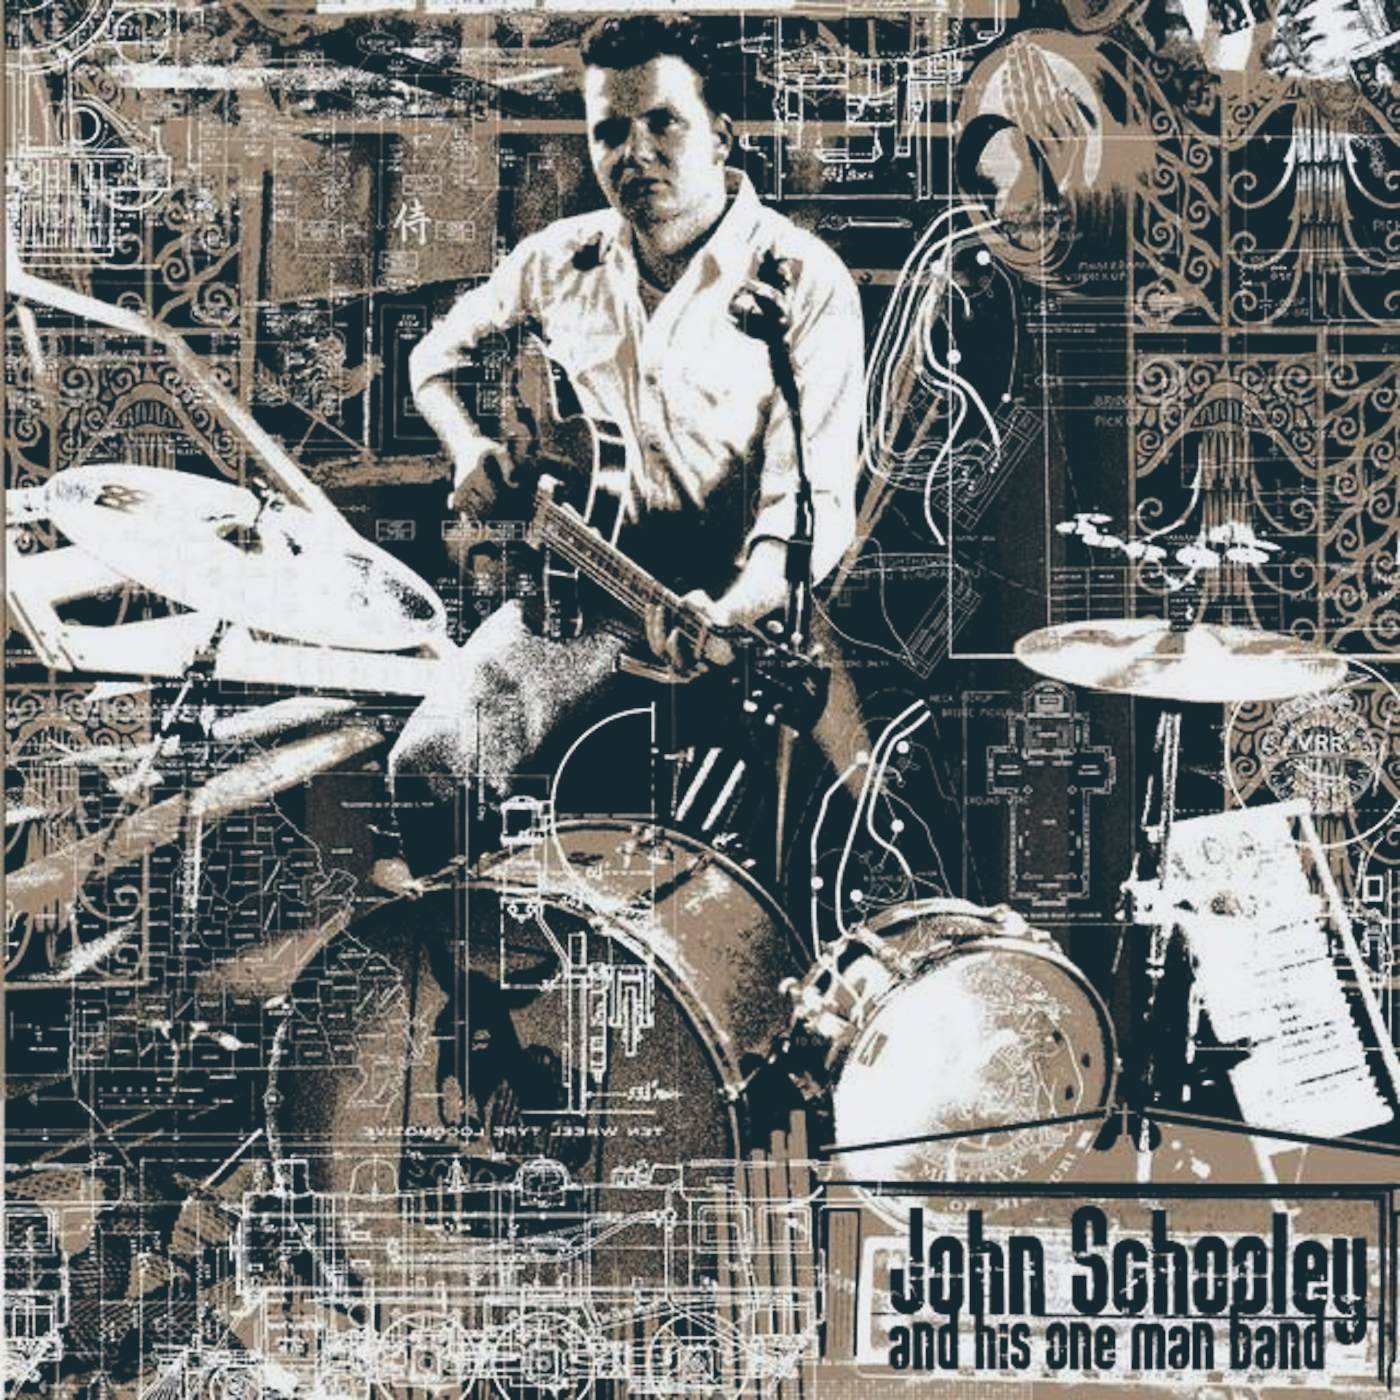 John Schooley & His One Man Band